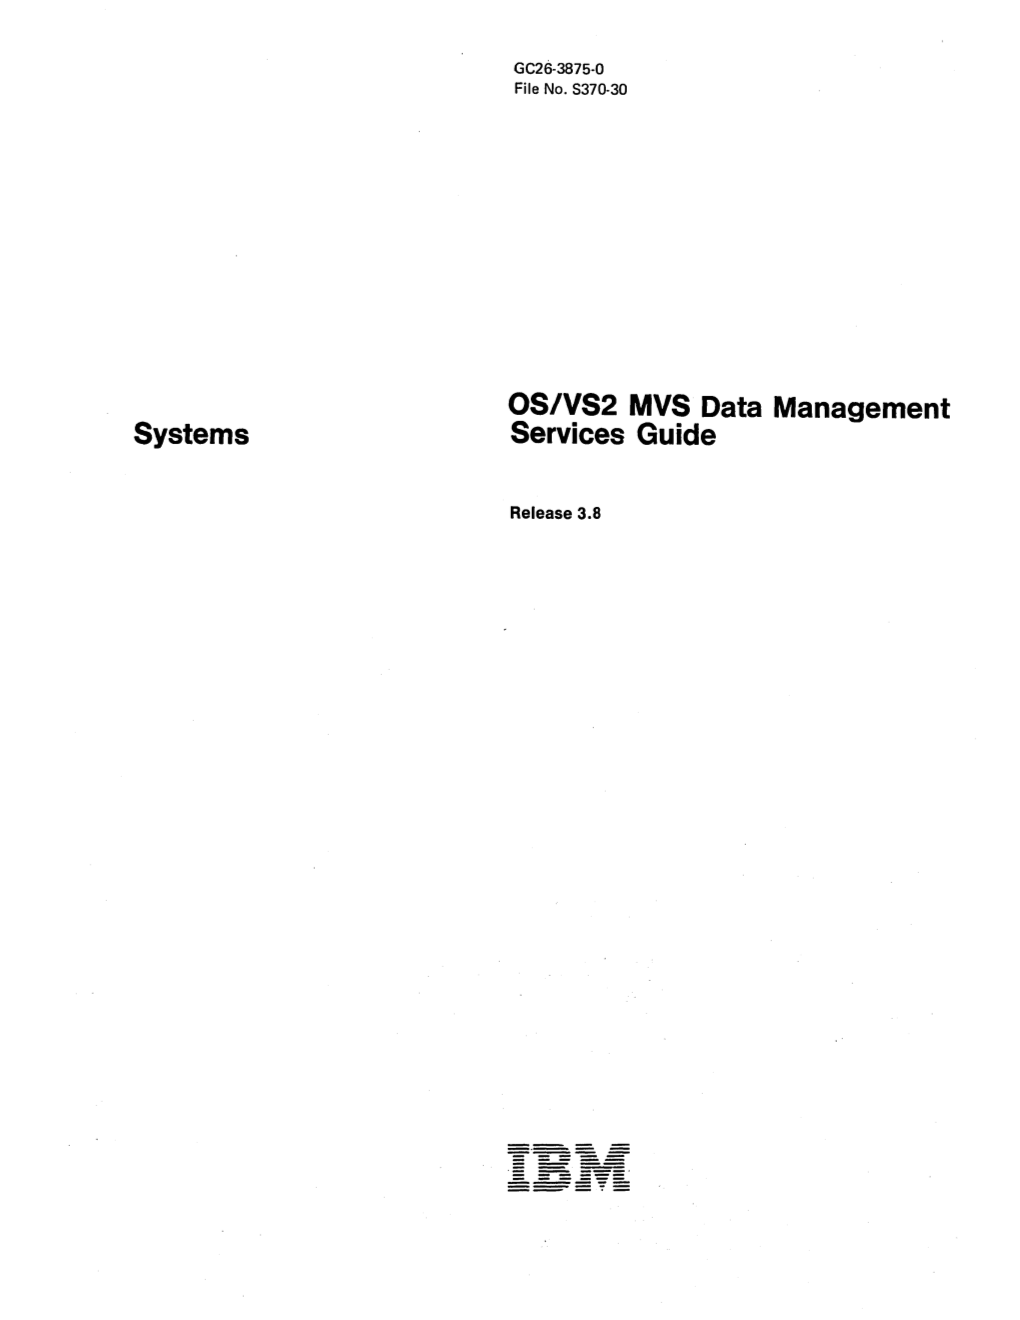 Systems OS/VS2 MVS Data Management